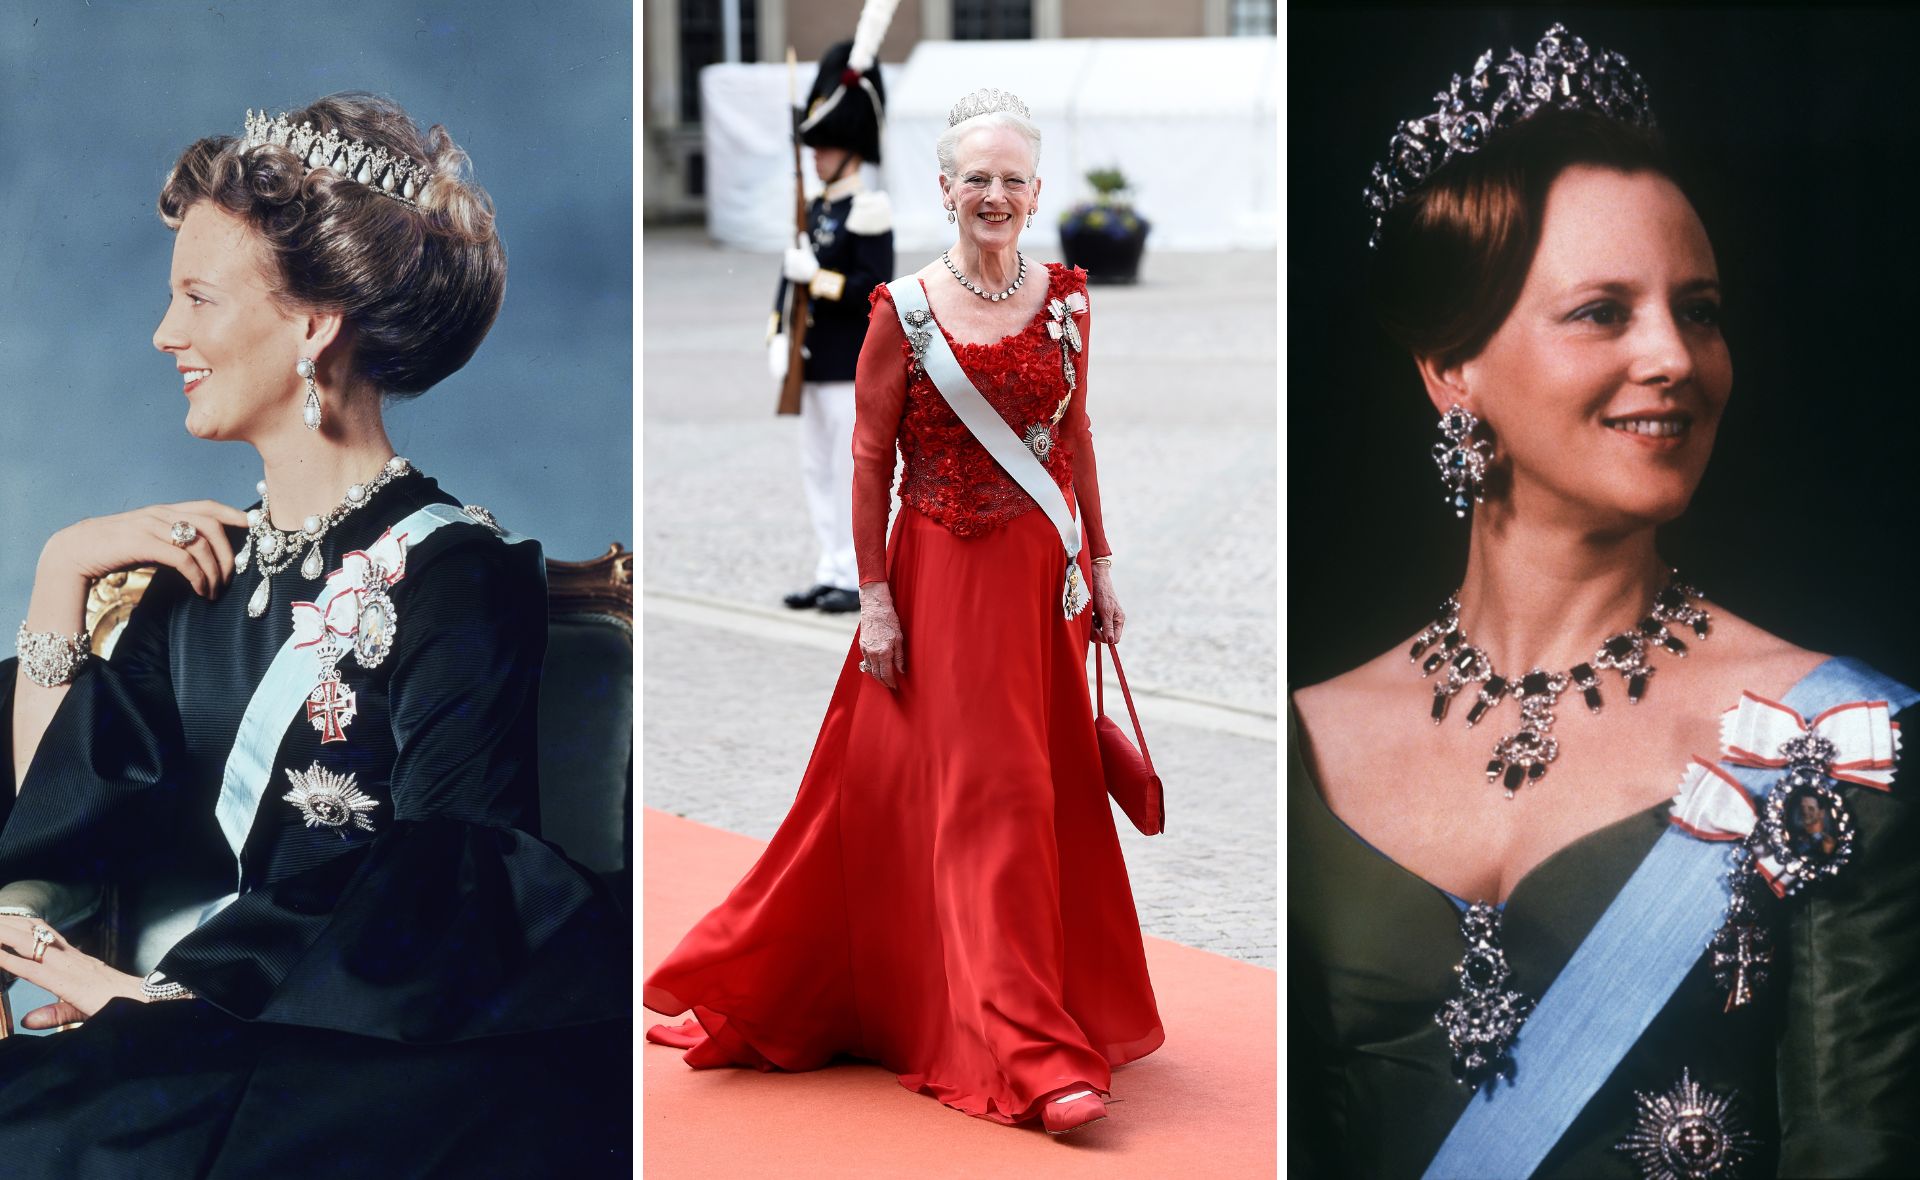 Who is Queen Margrethe II of Denmark?